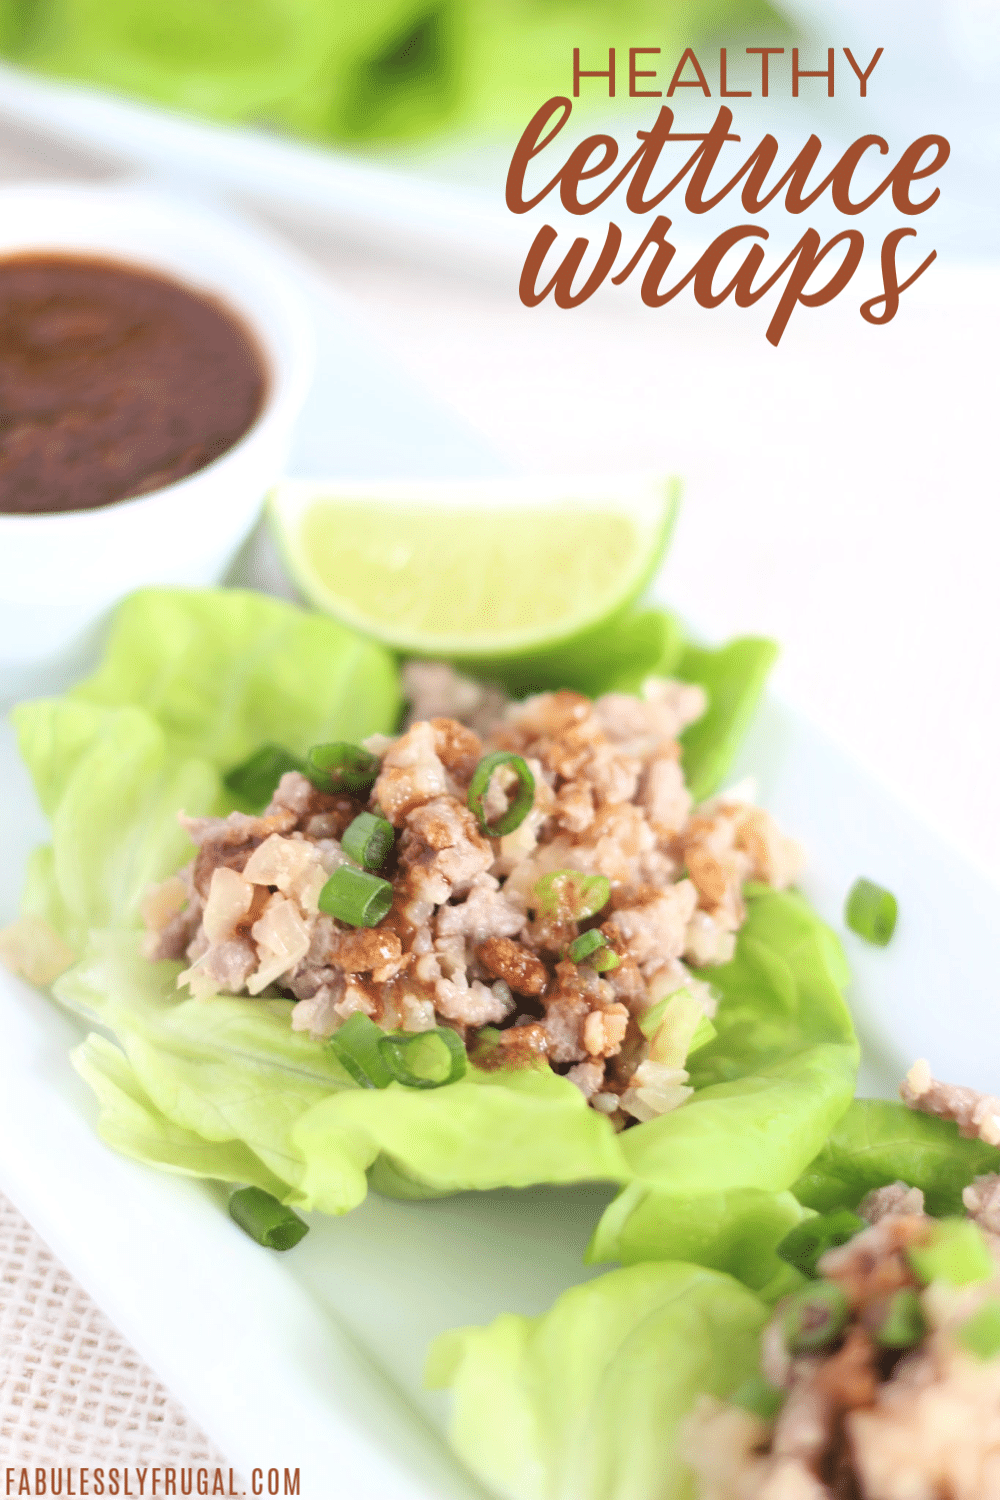 Healthy lettuce wraps recipe